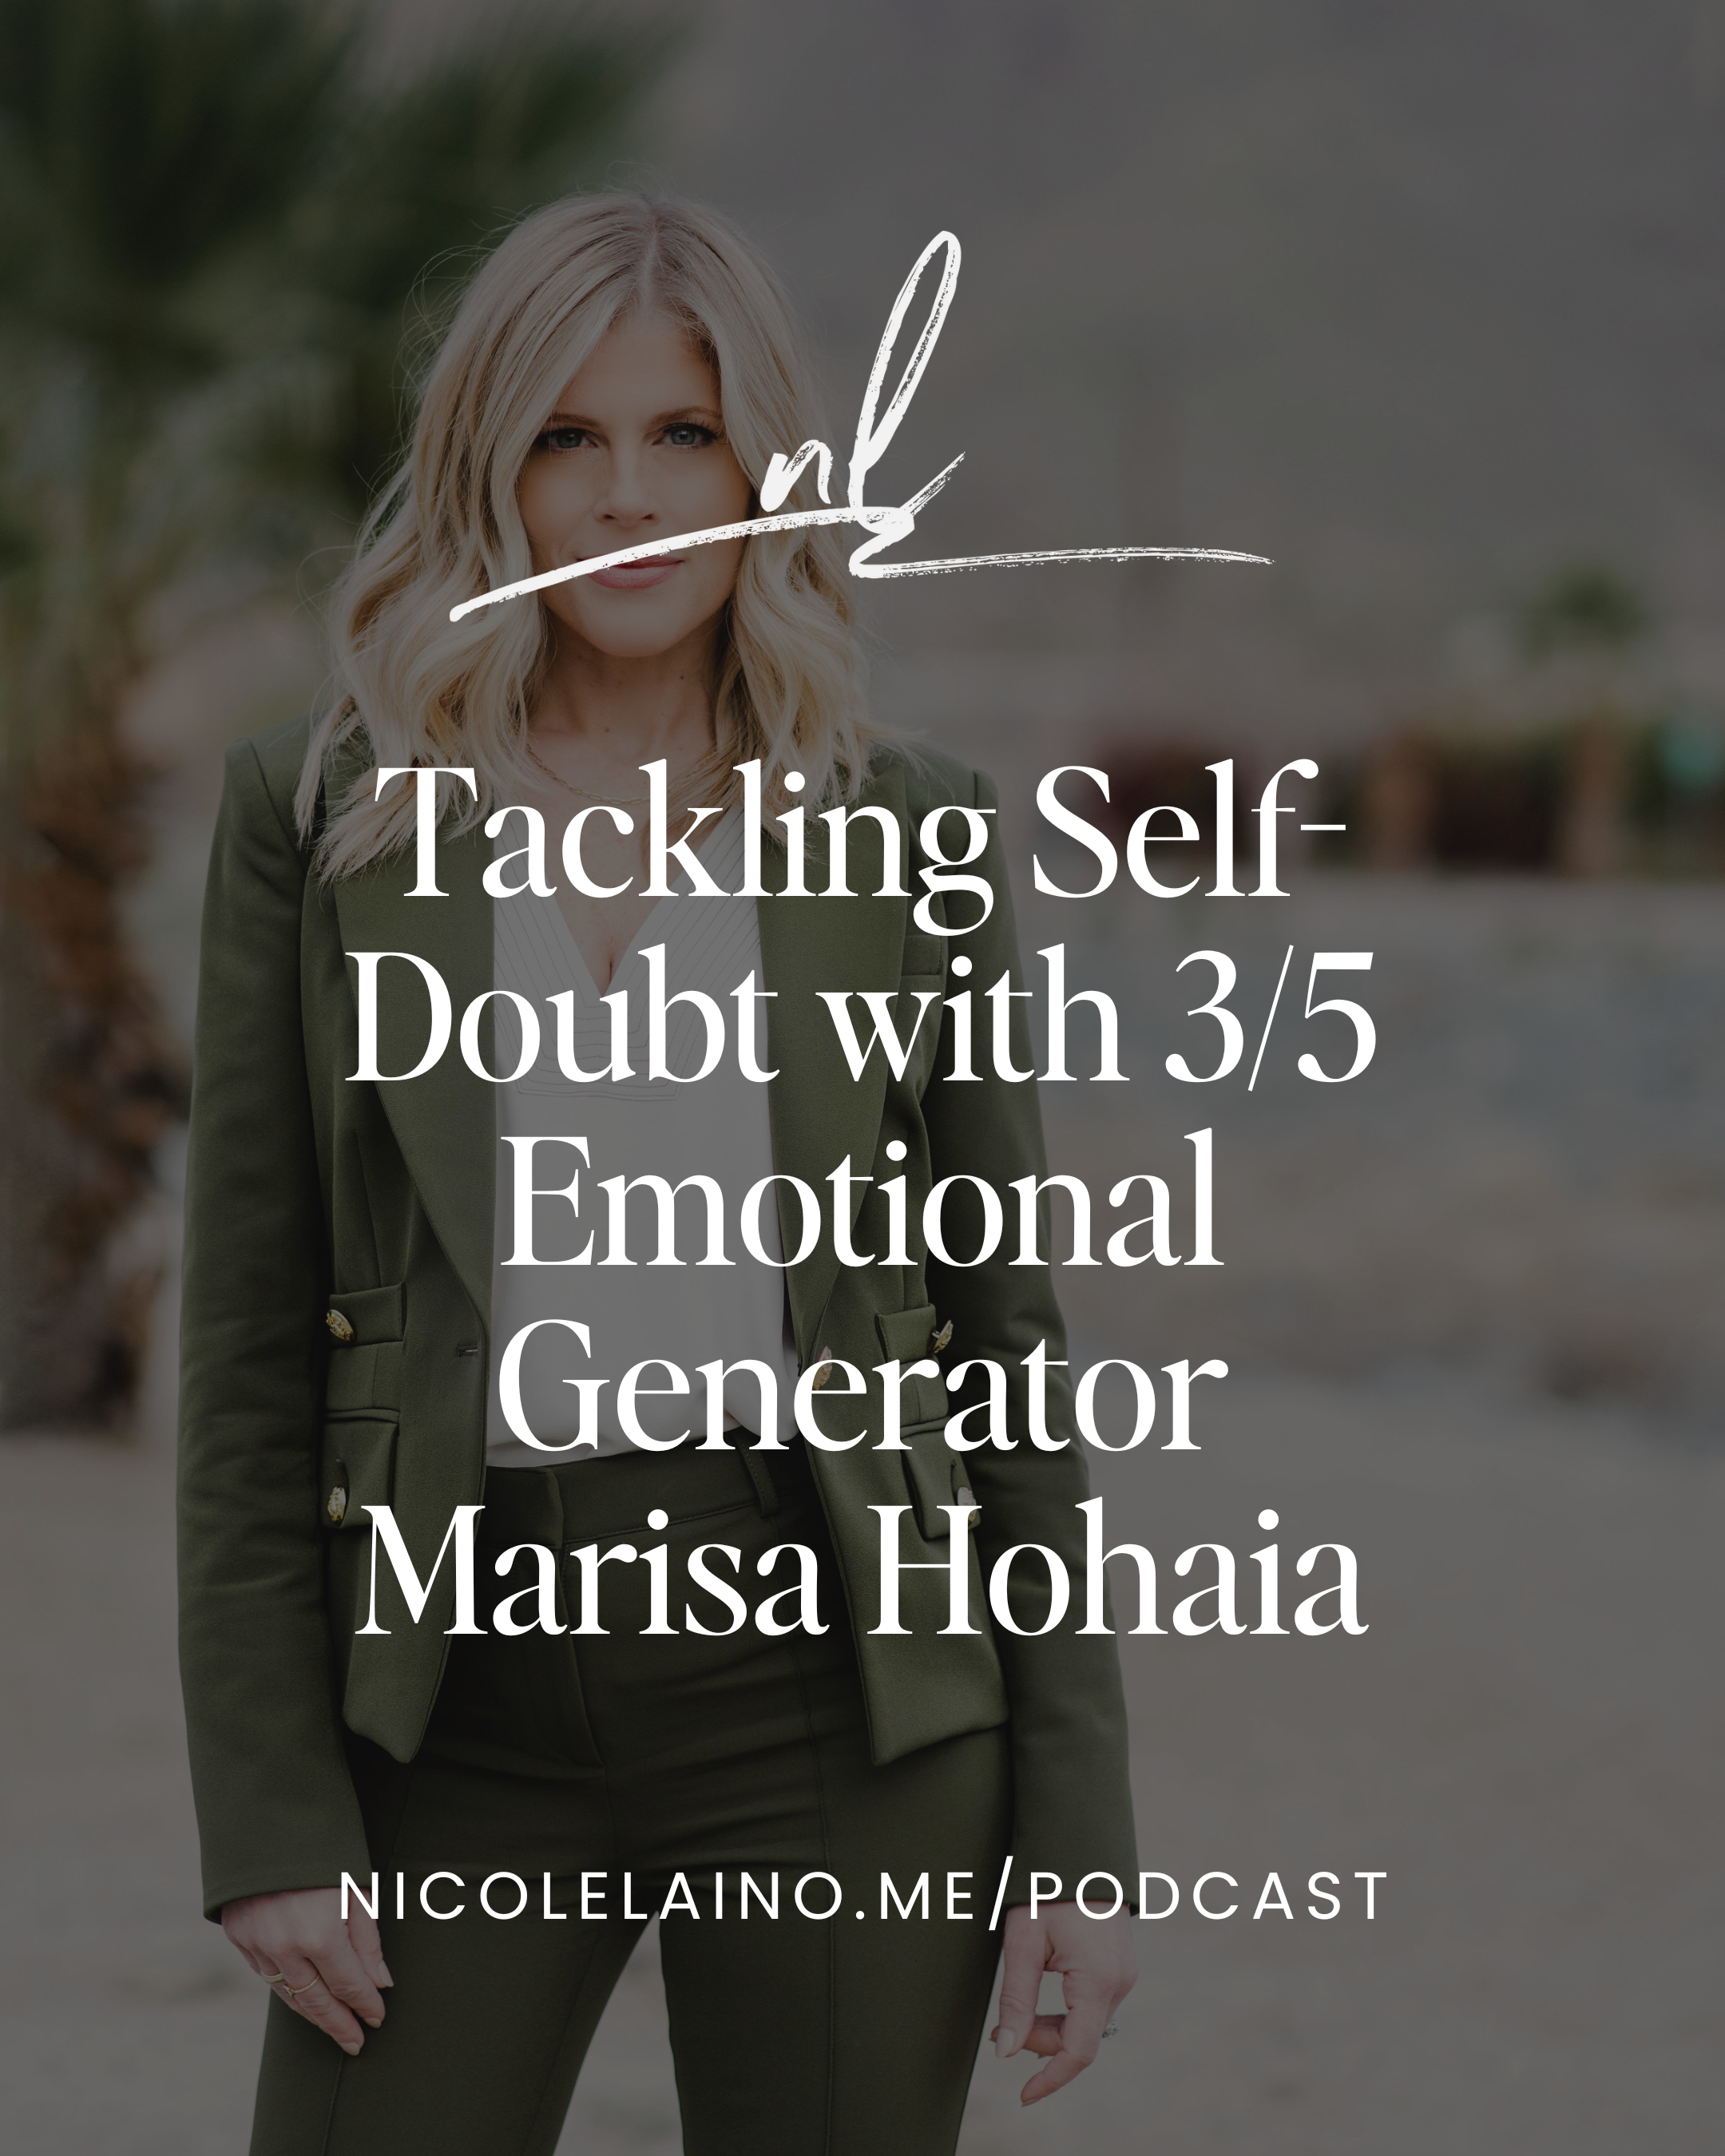 Tackling Self-Doubt with 3/5 Emotional Generator Marisa Hohaia